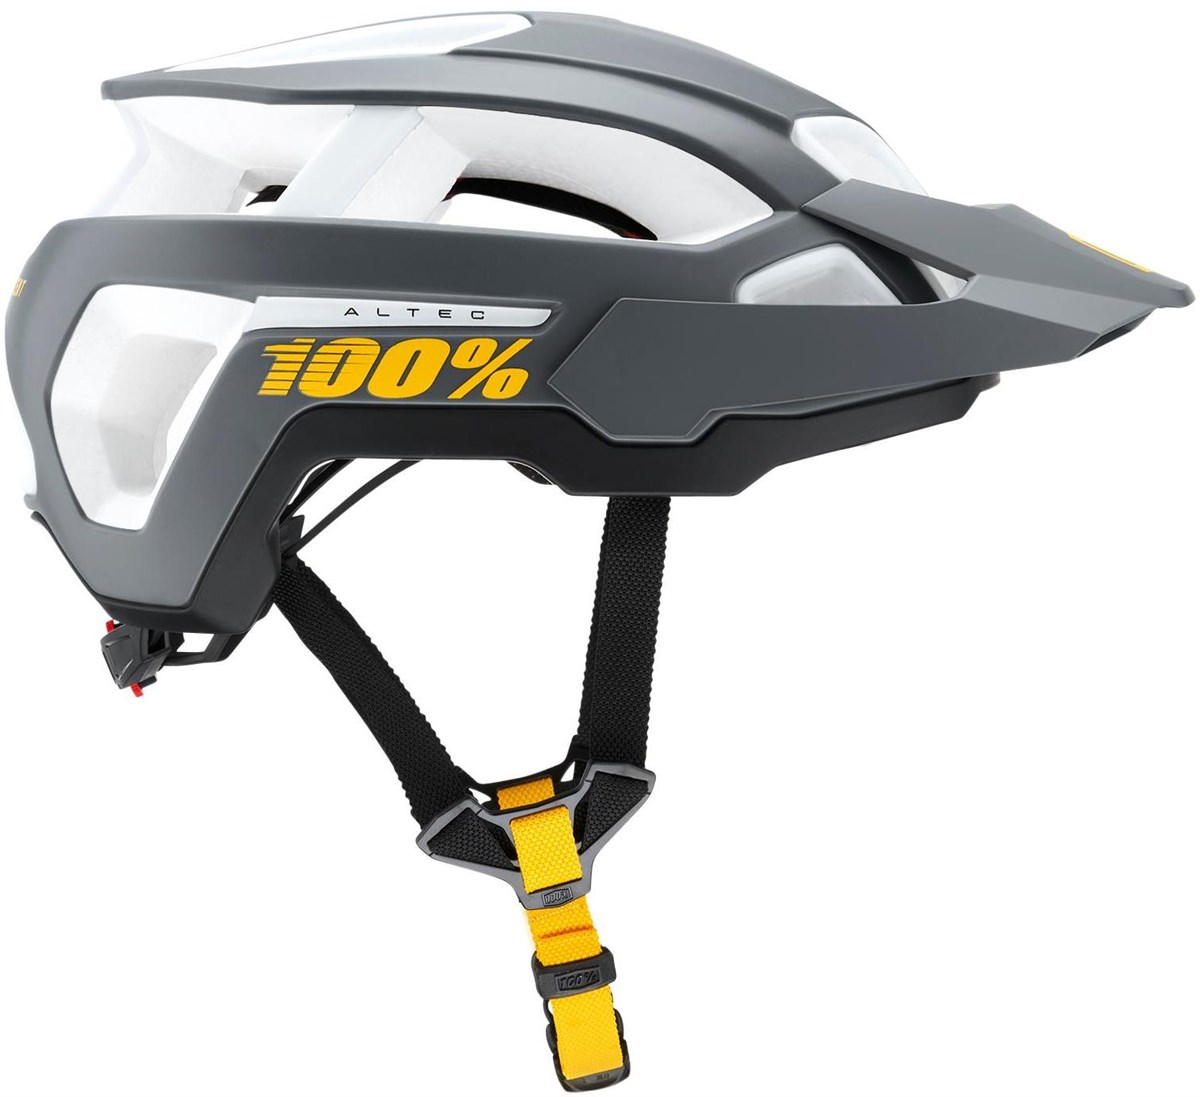 100% Altec MTB Cycling Helmet product image